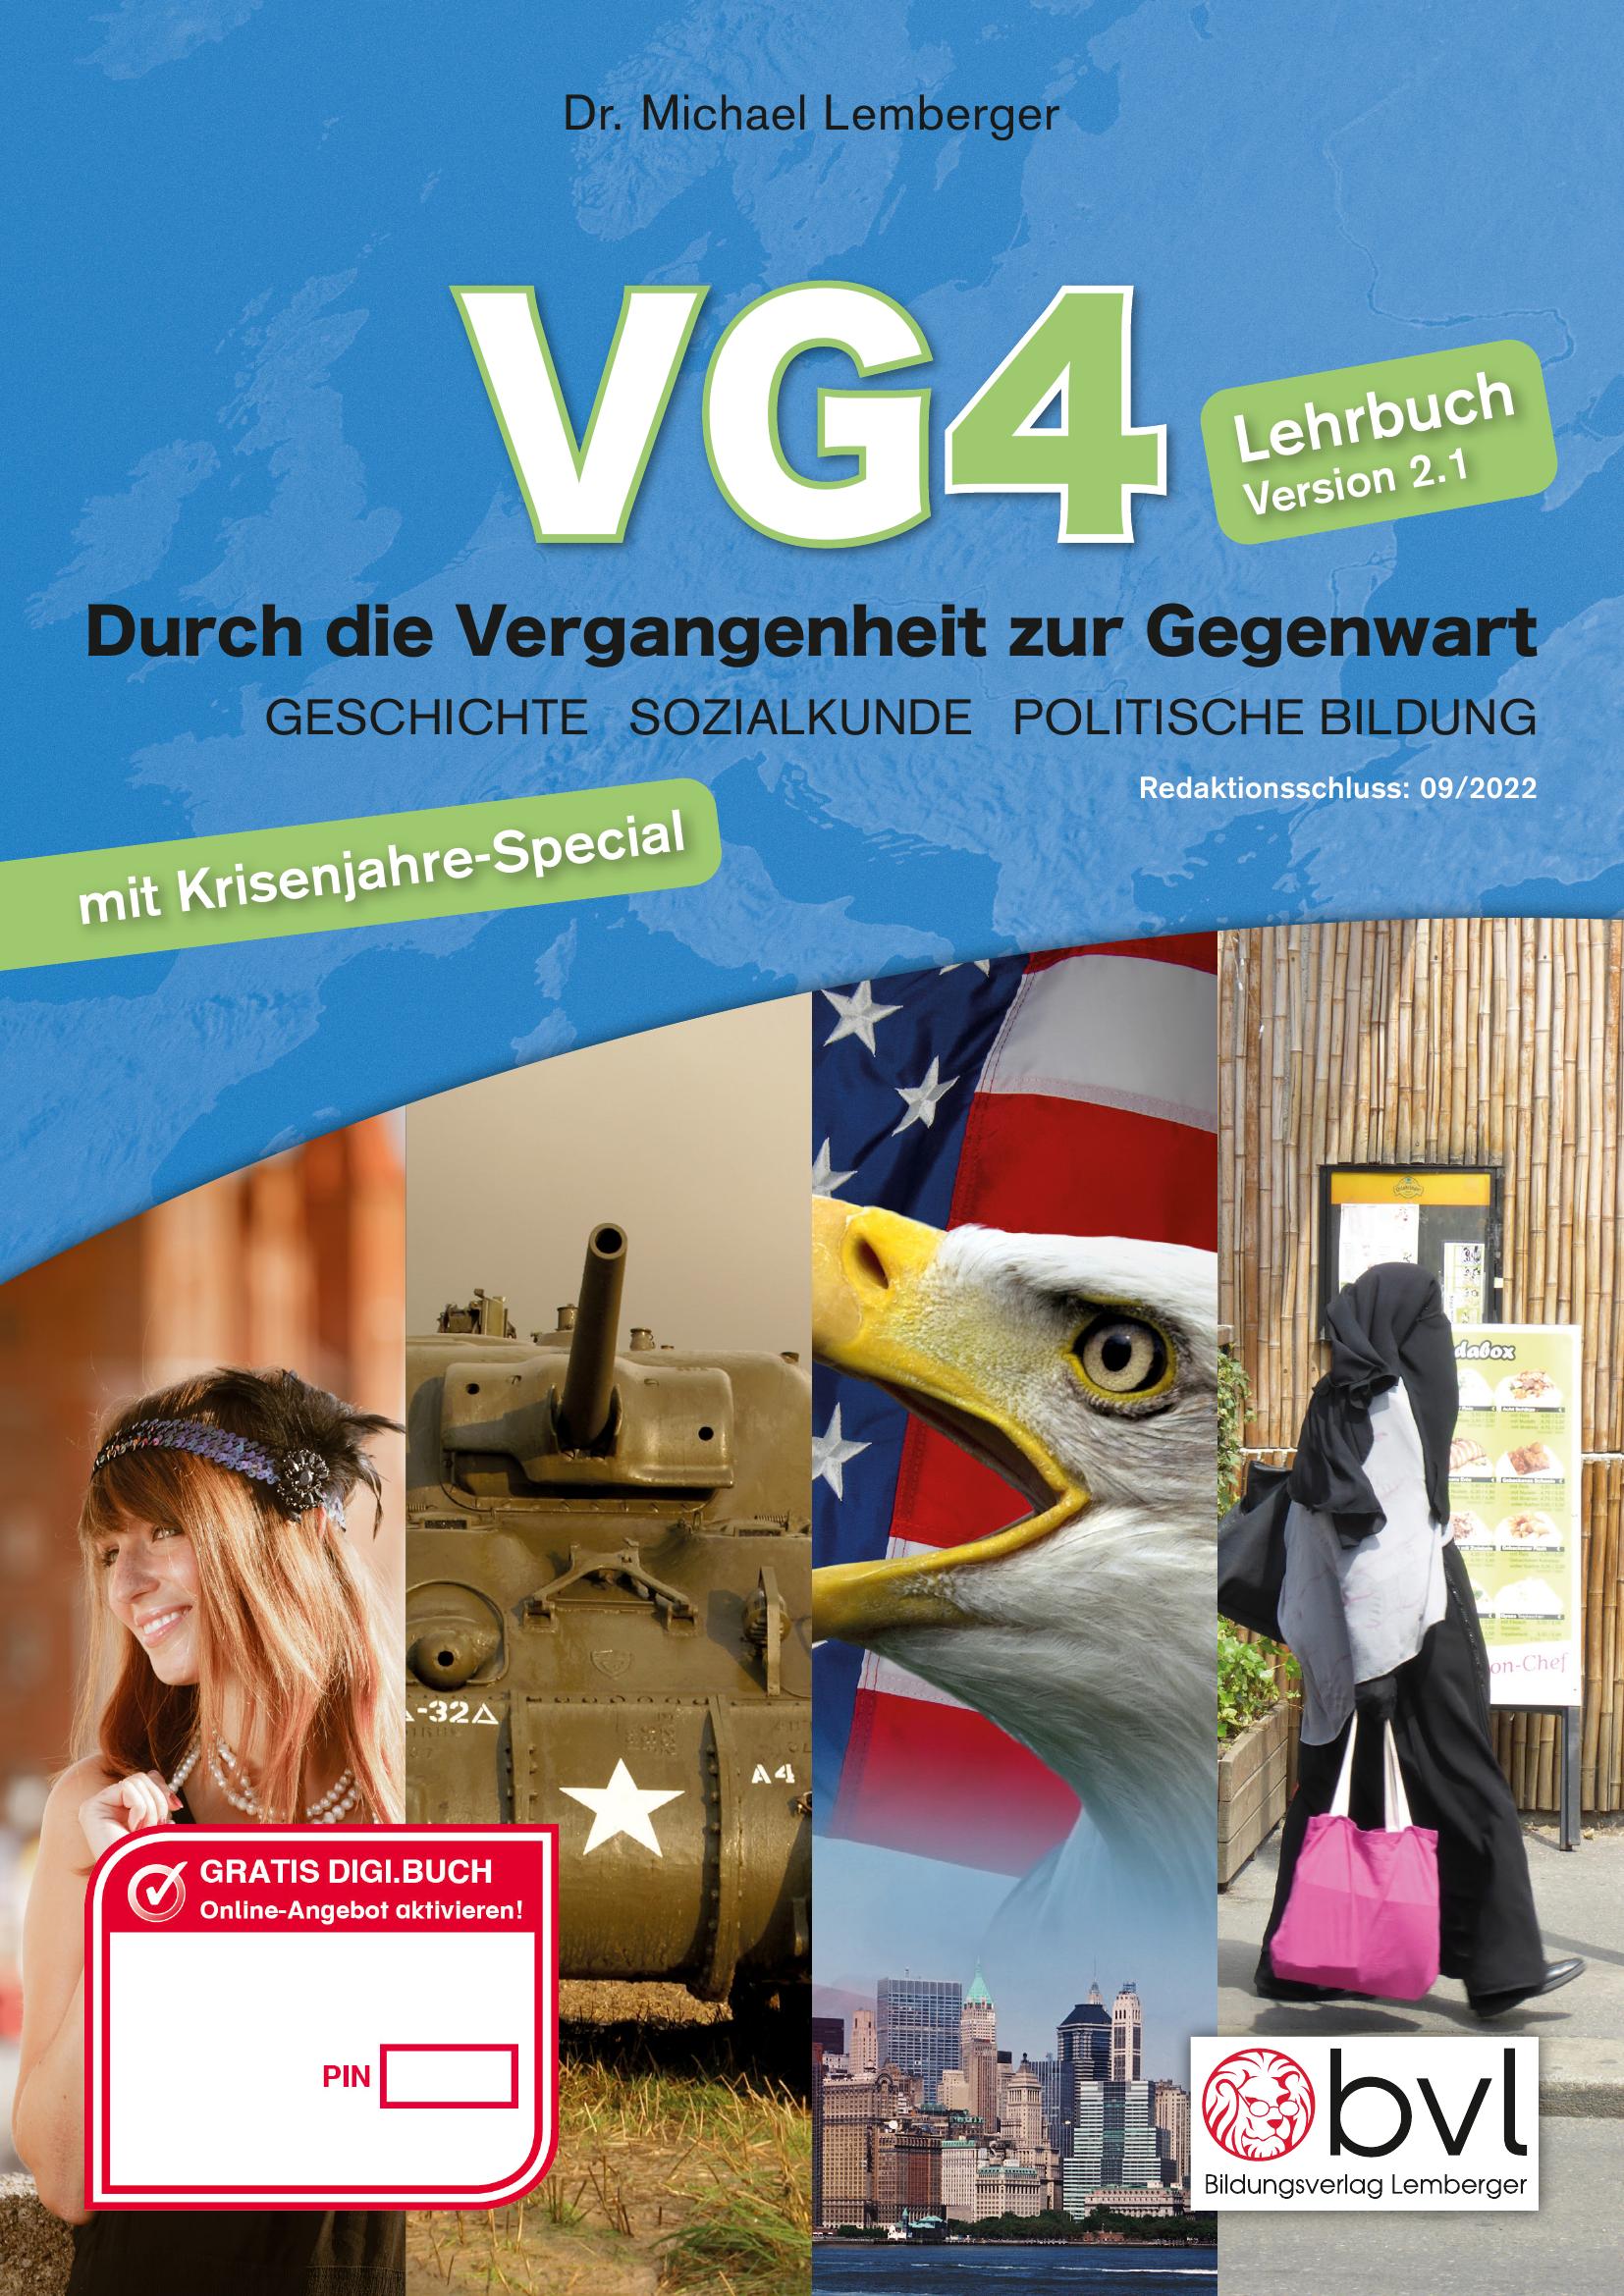 VG 4 - Lehrbuch